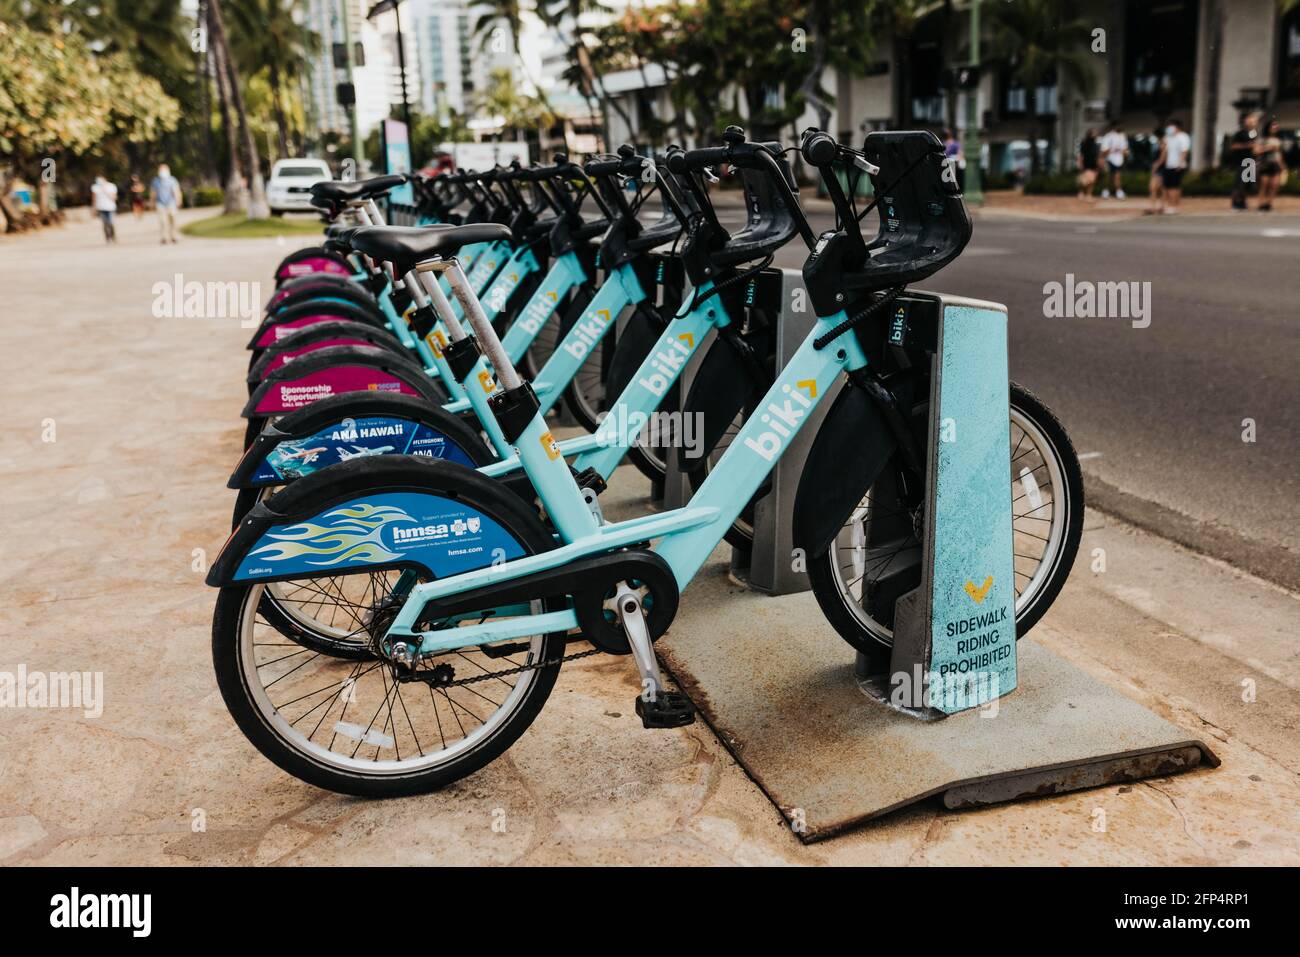 Rental bikes for pedestrians along the street in Waikiki Stock Photo